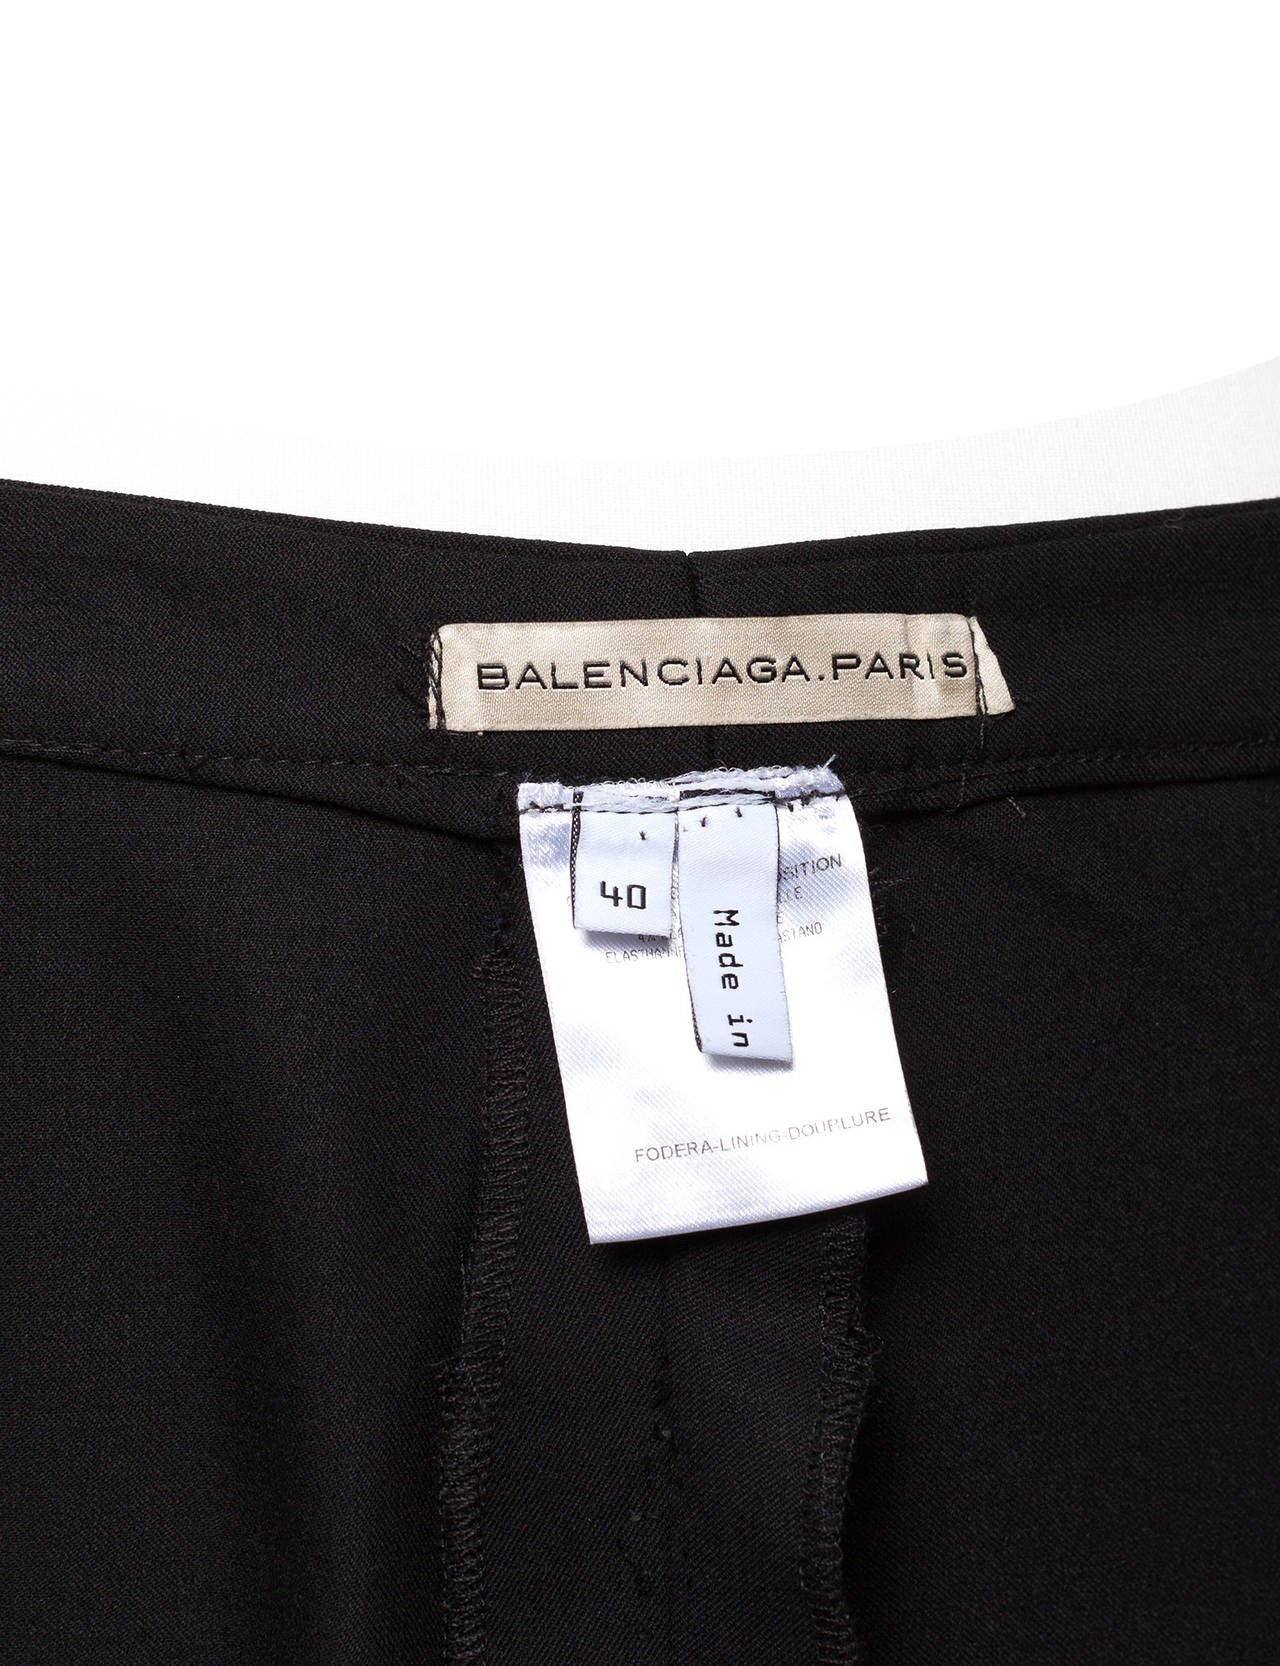 Balenciaga by Nicolas Ghesquire pleated cargo mini skirt. 2